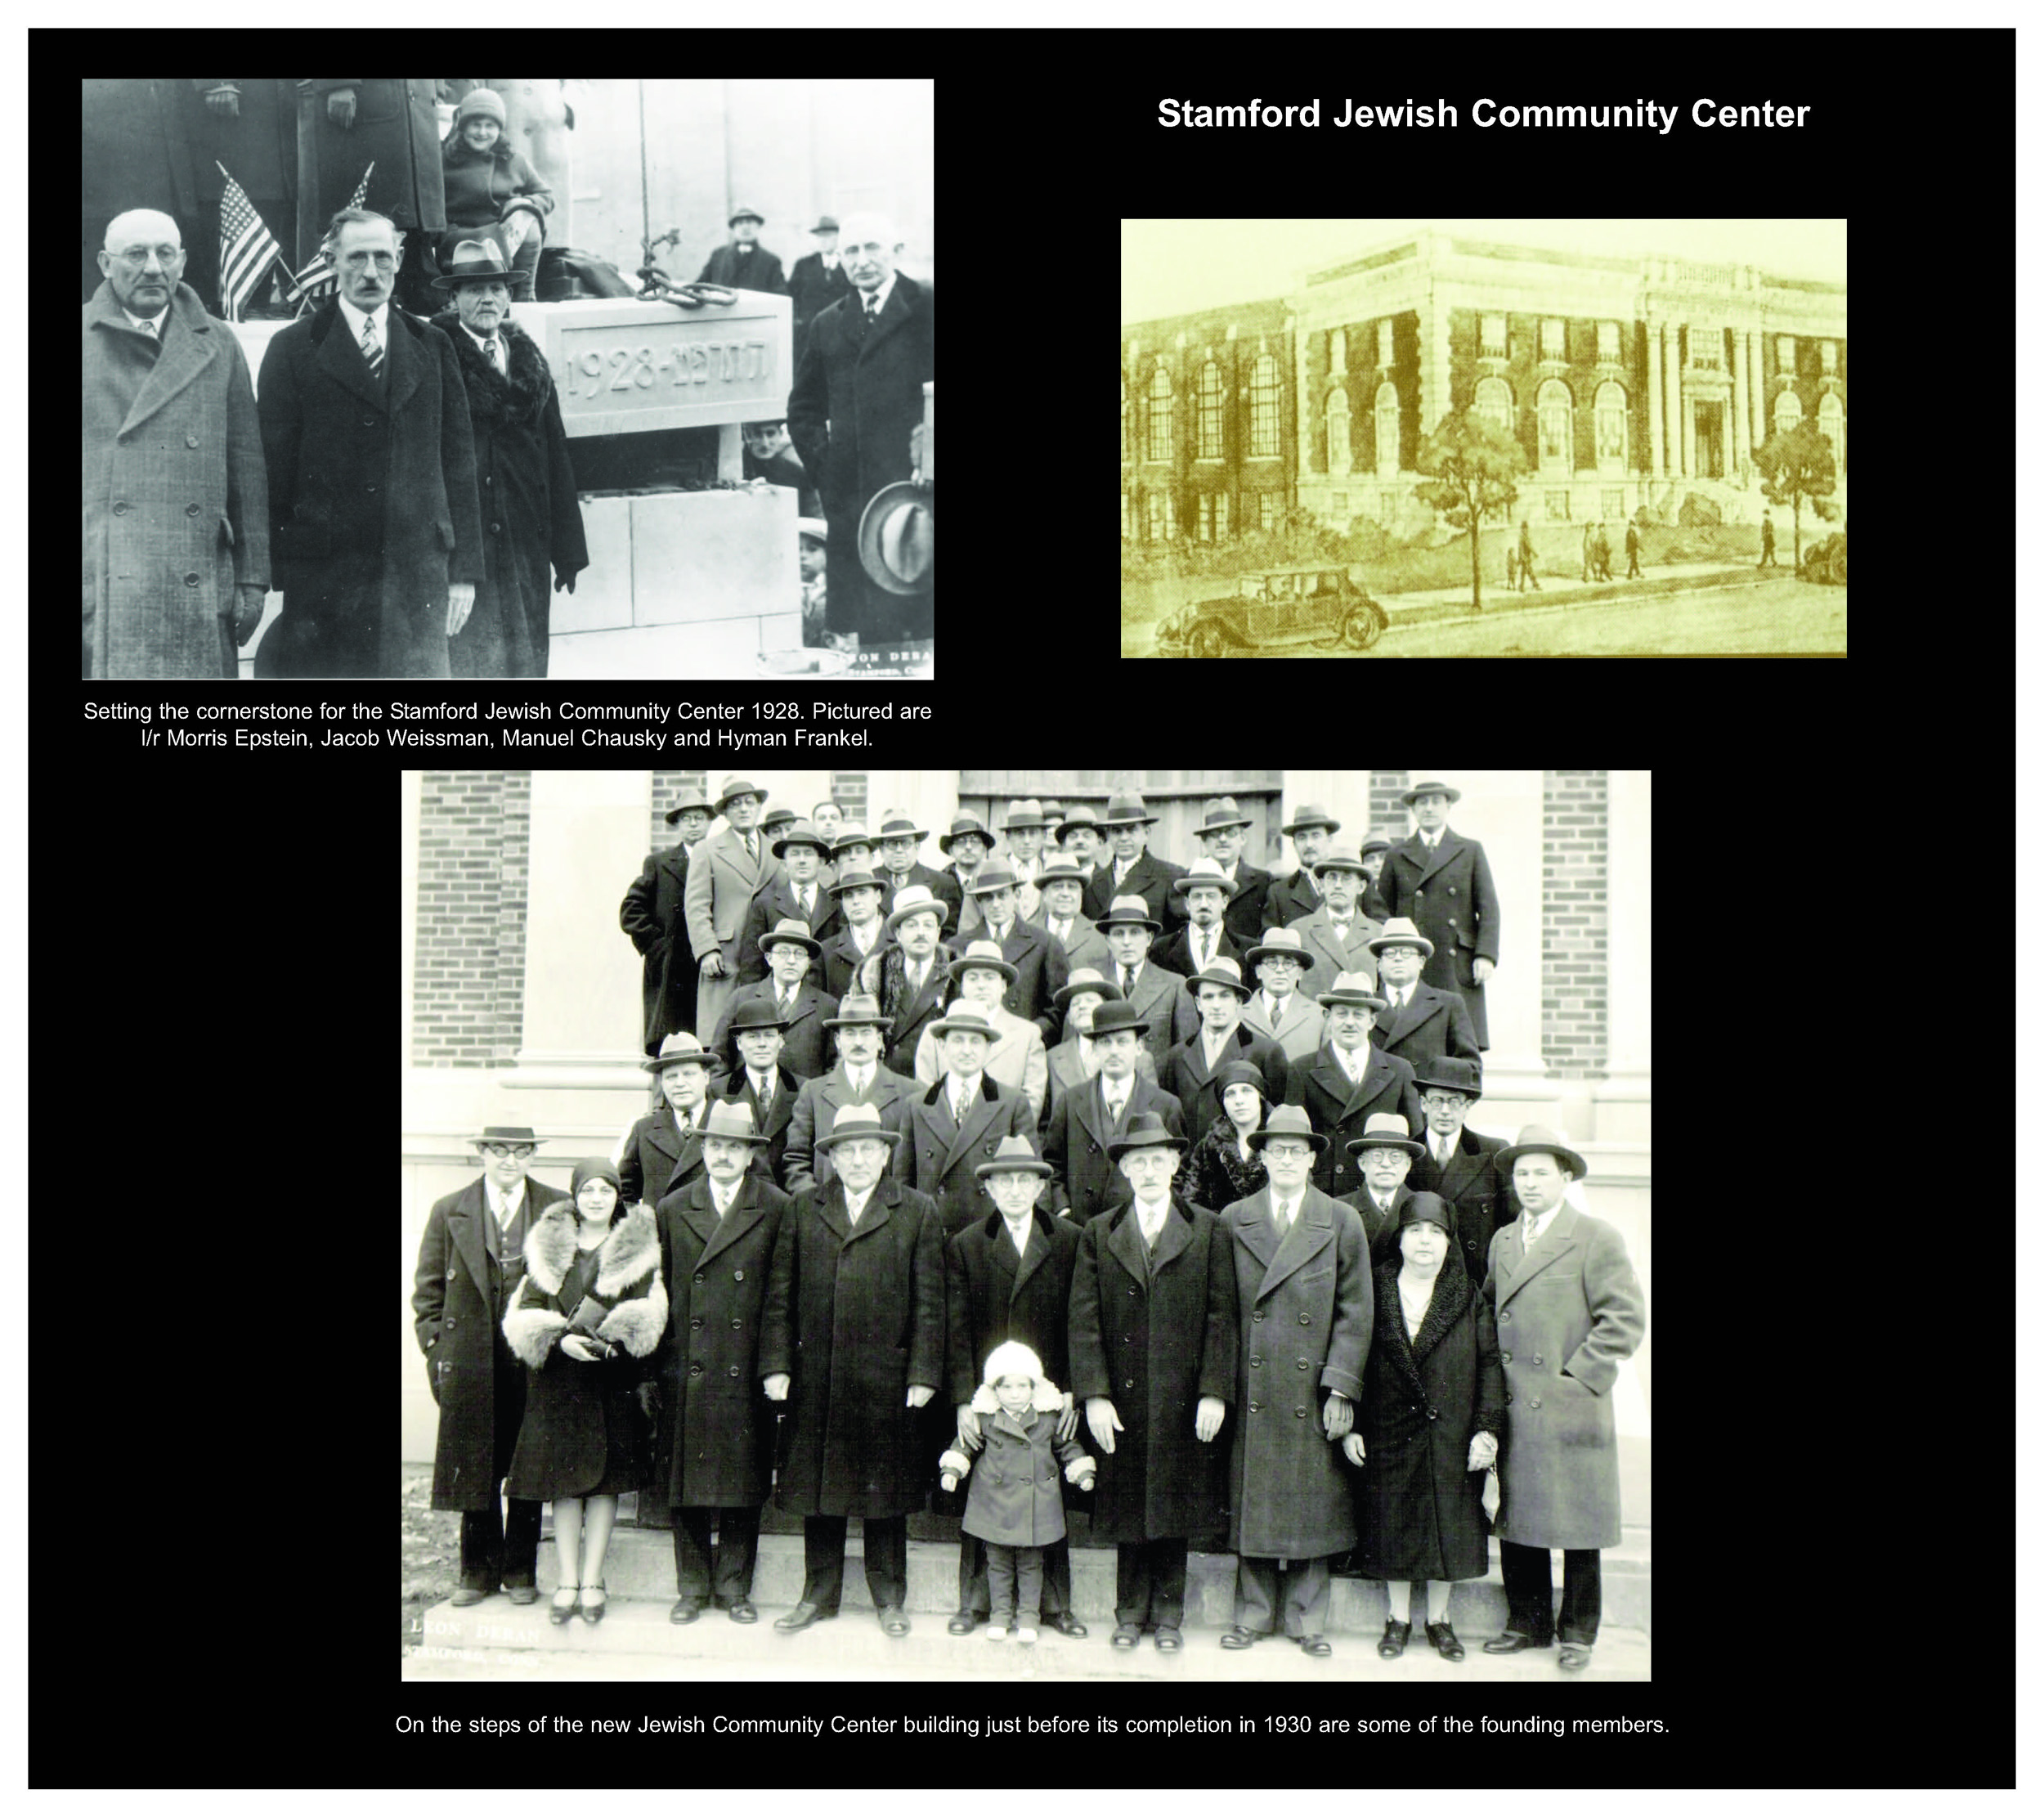 Stamford Jewish Community Center panel